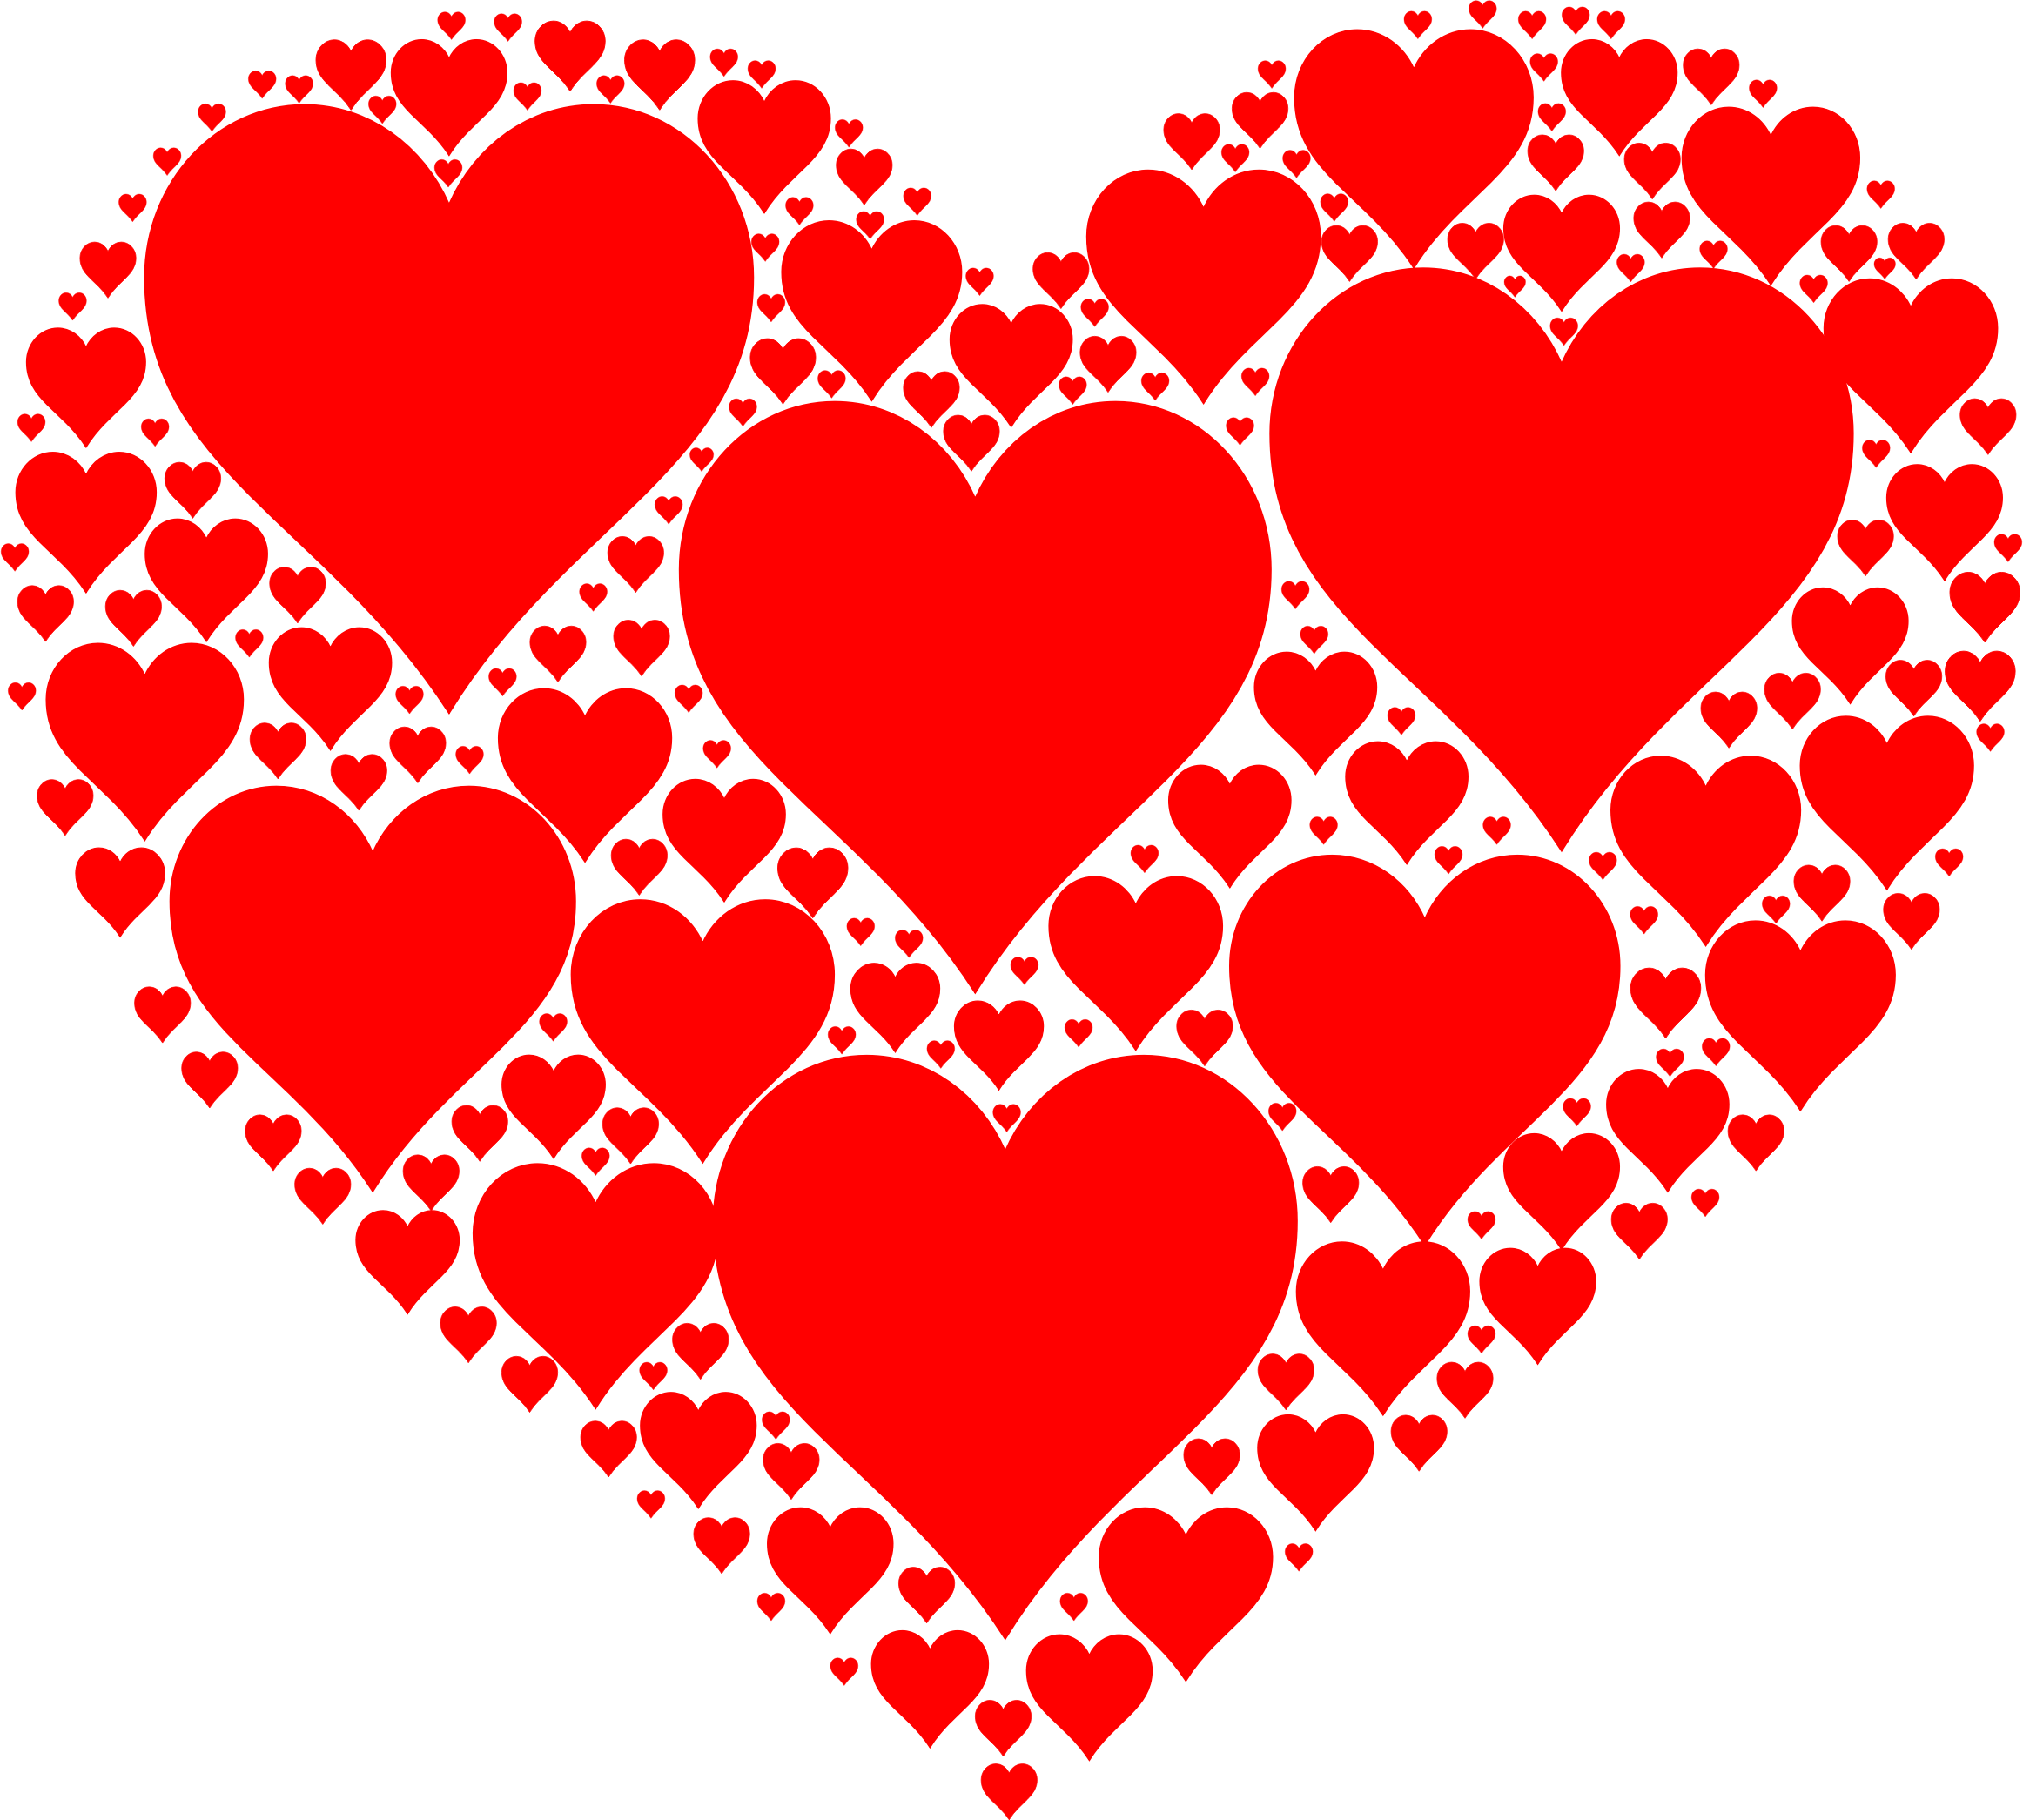 Heart in Heart Vector Files image - Free stock photo - Public Domain